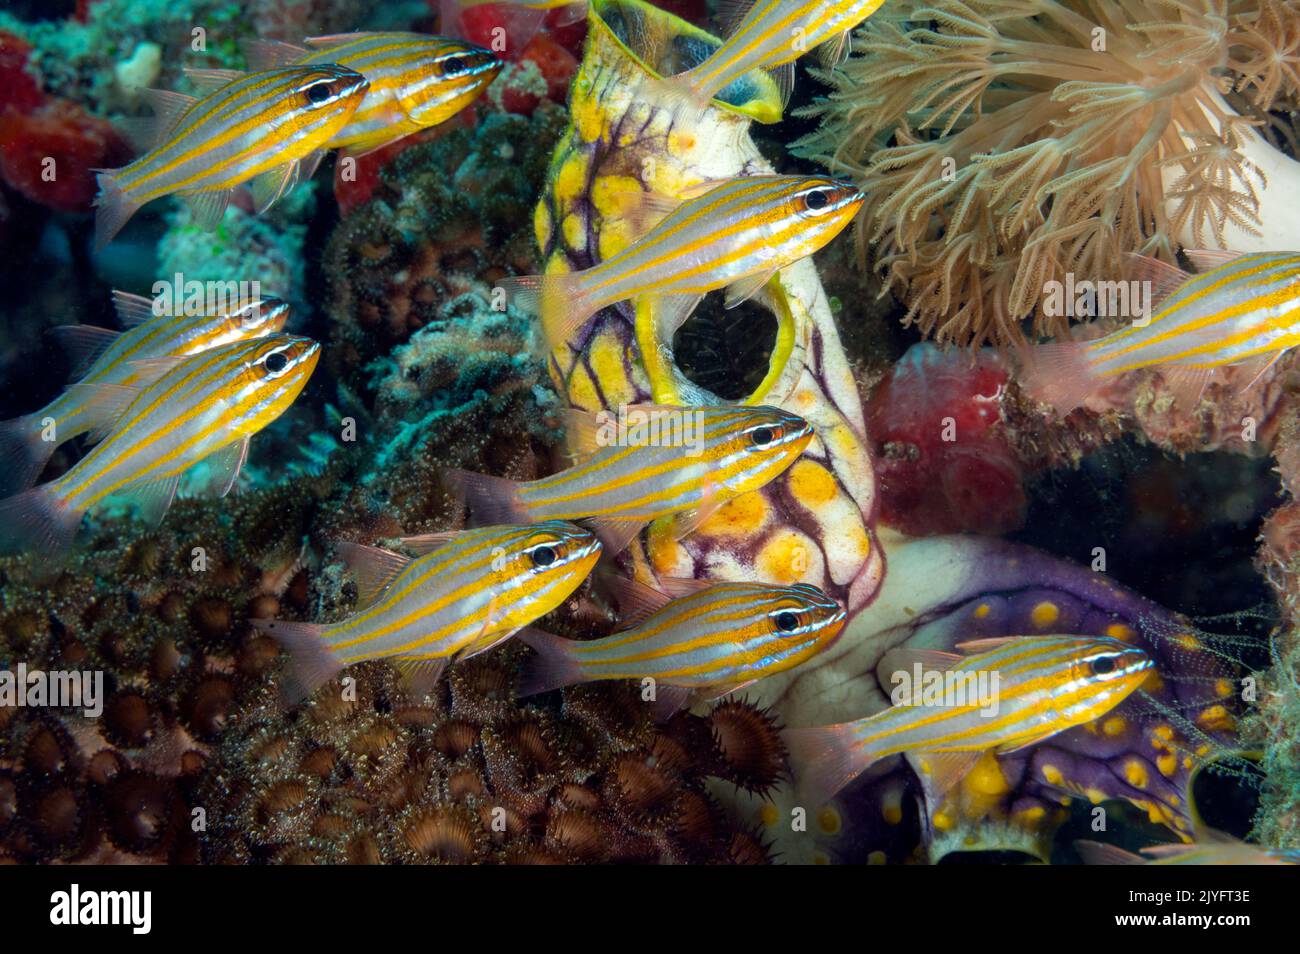 Cardinafish wassinski Apagon corail, Raja Ampat, Indonésie Banque D'Images